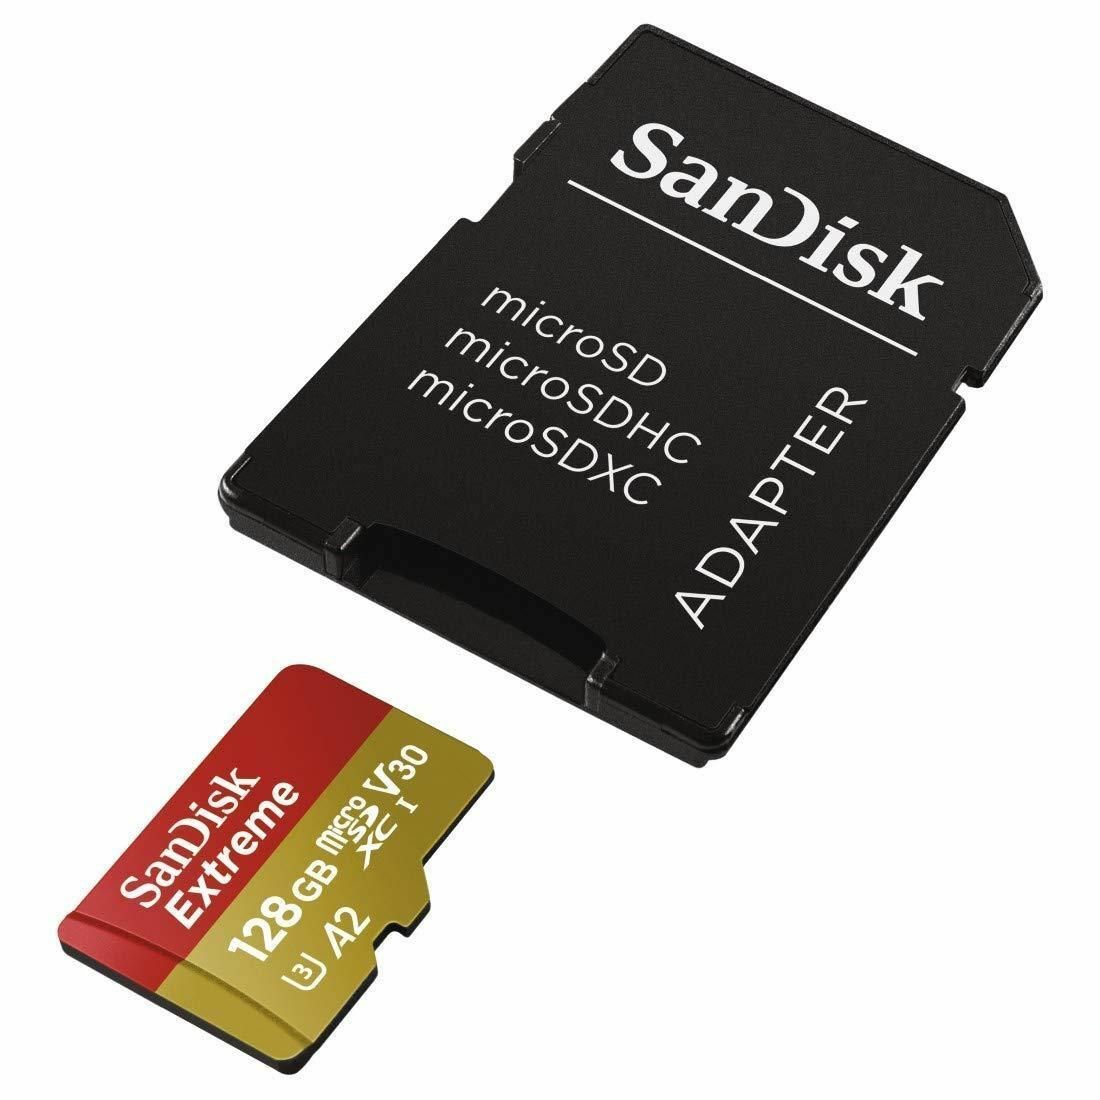 SanDisk 128GB Extreme UHS-I microSDXC (160MB/S 90)